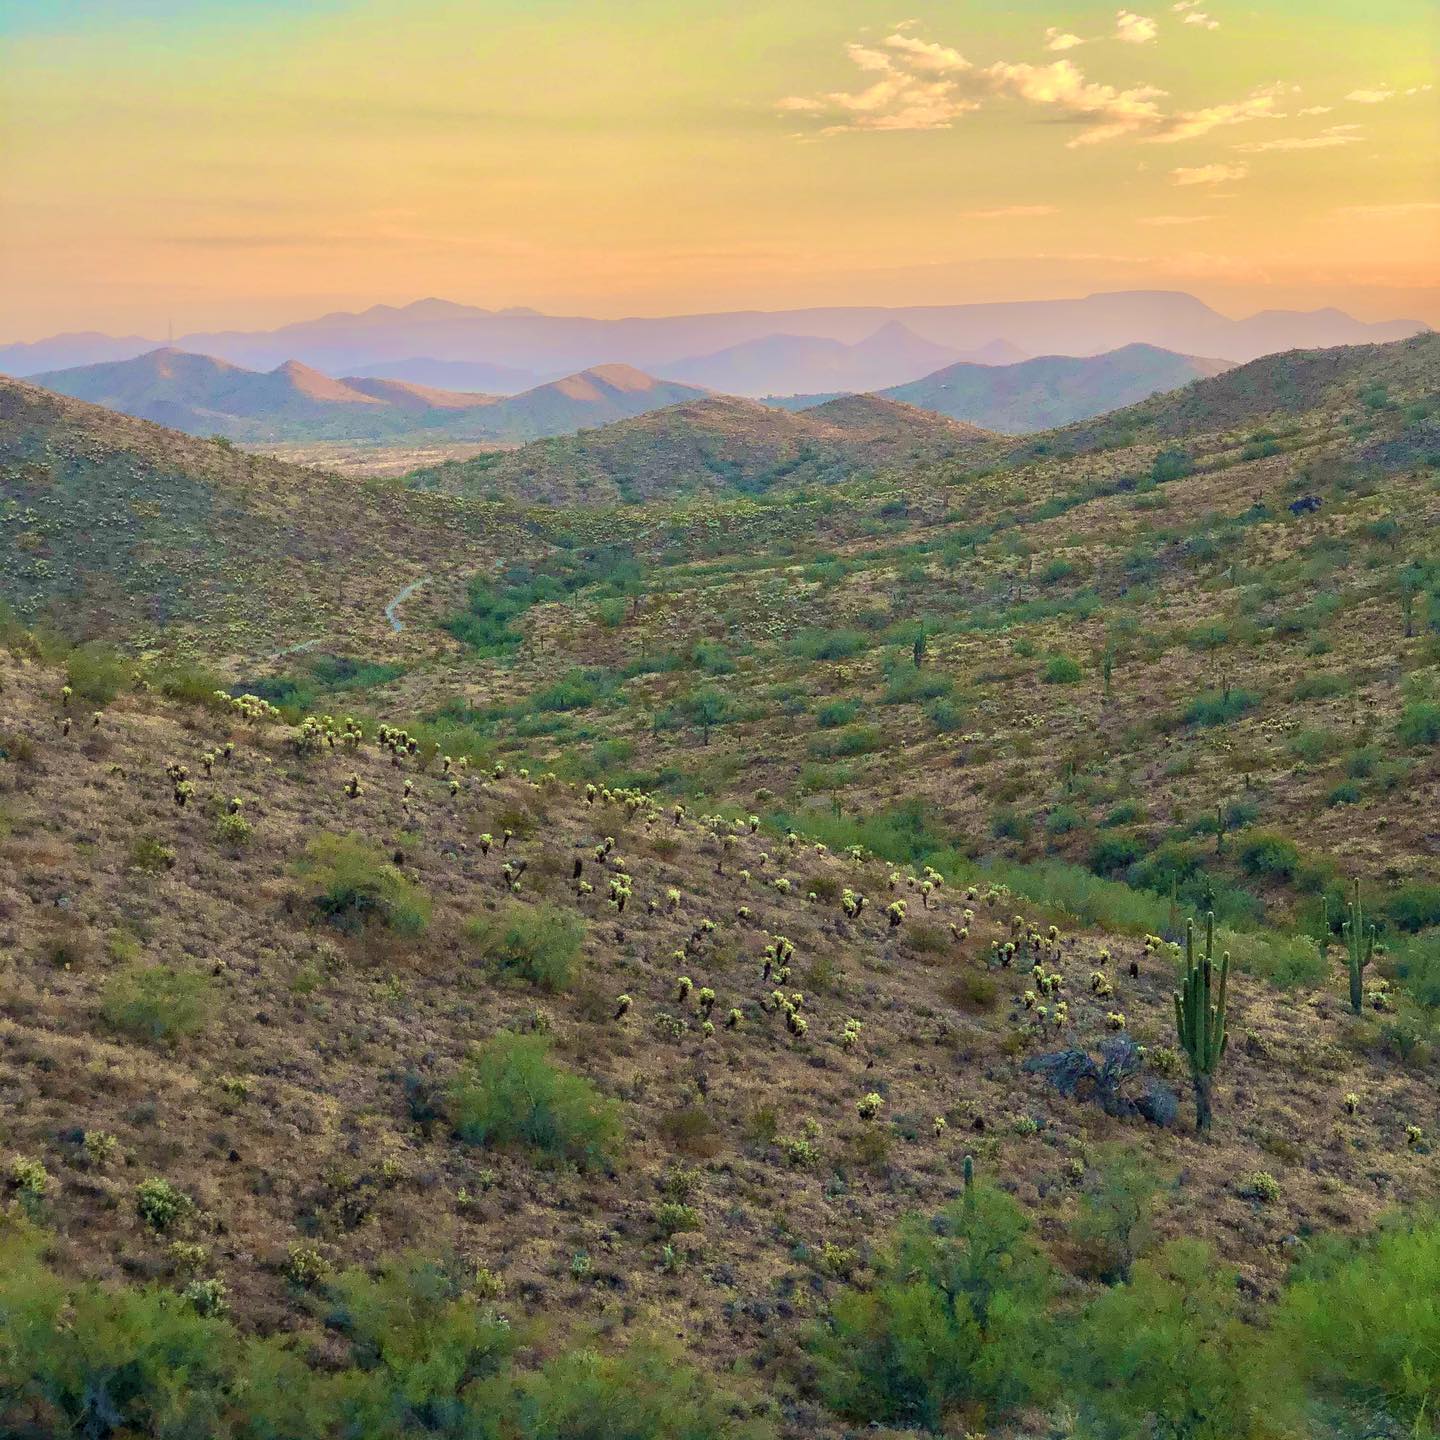 Phoenix valley and desert at sunrise. Photo by Instagram user @thrunatureslens